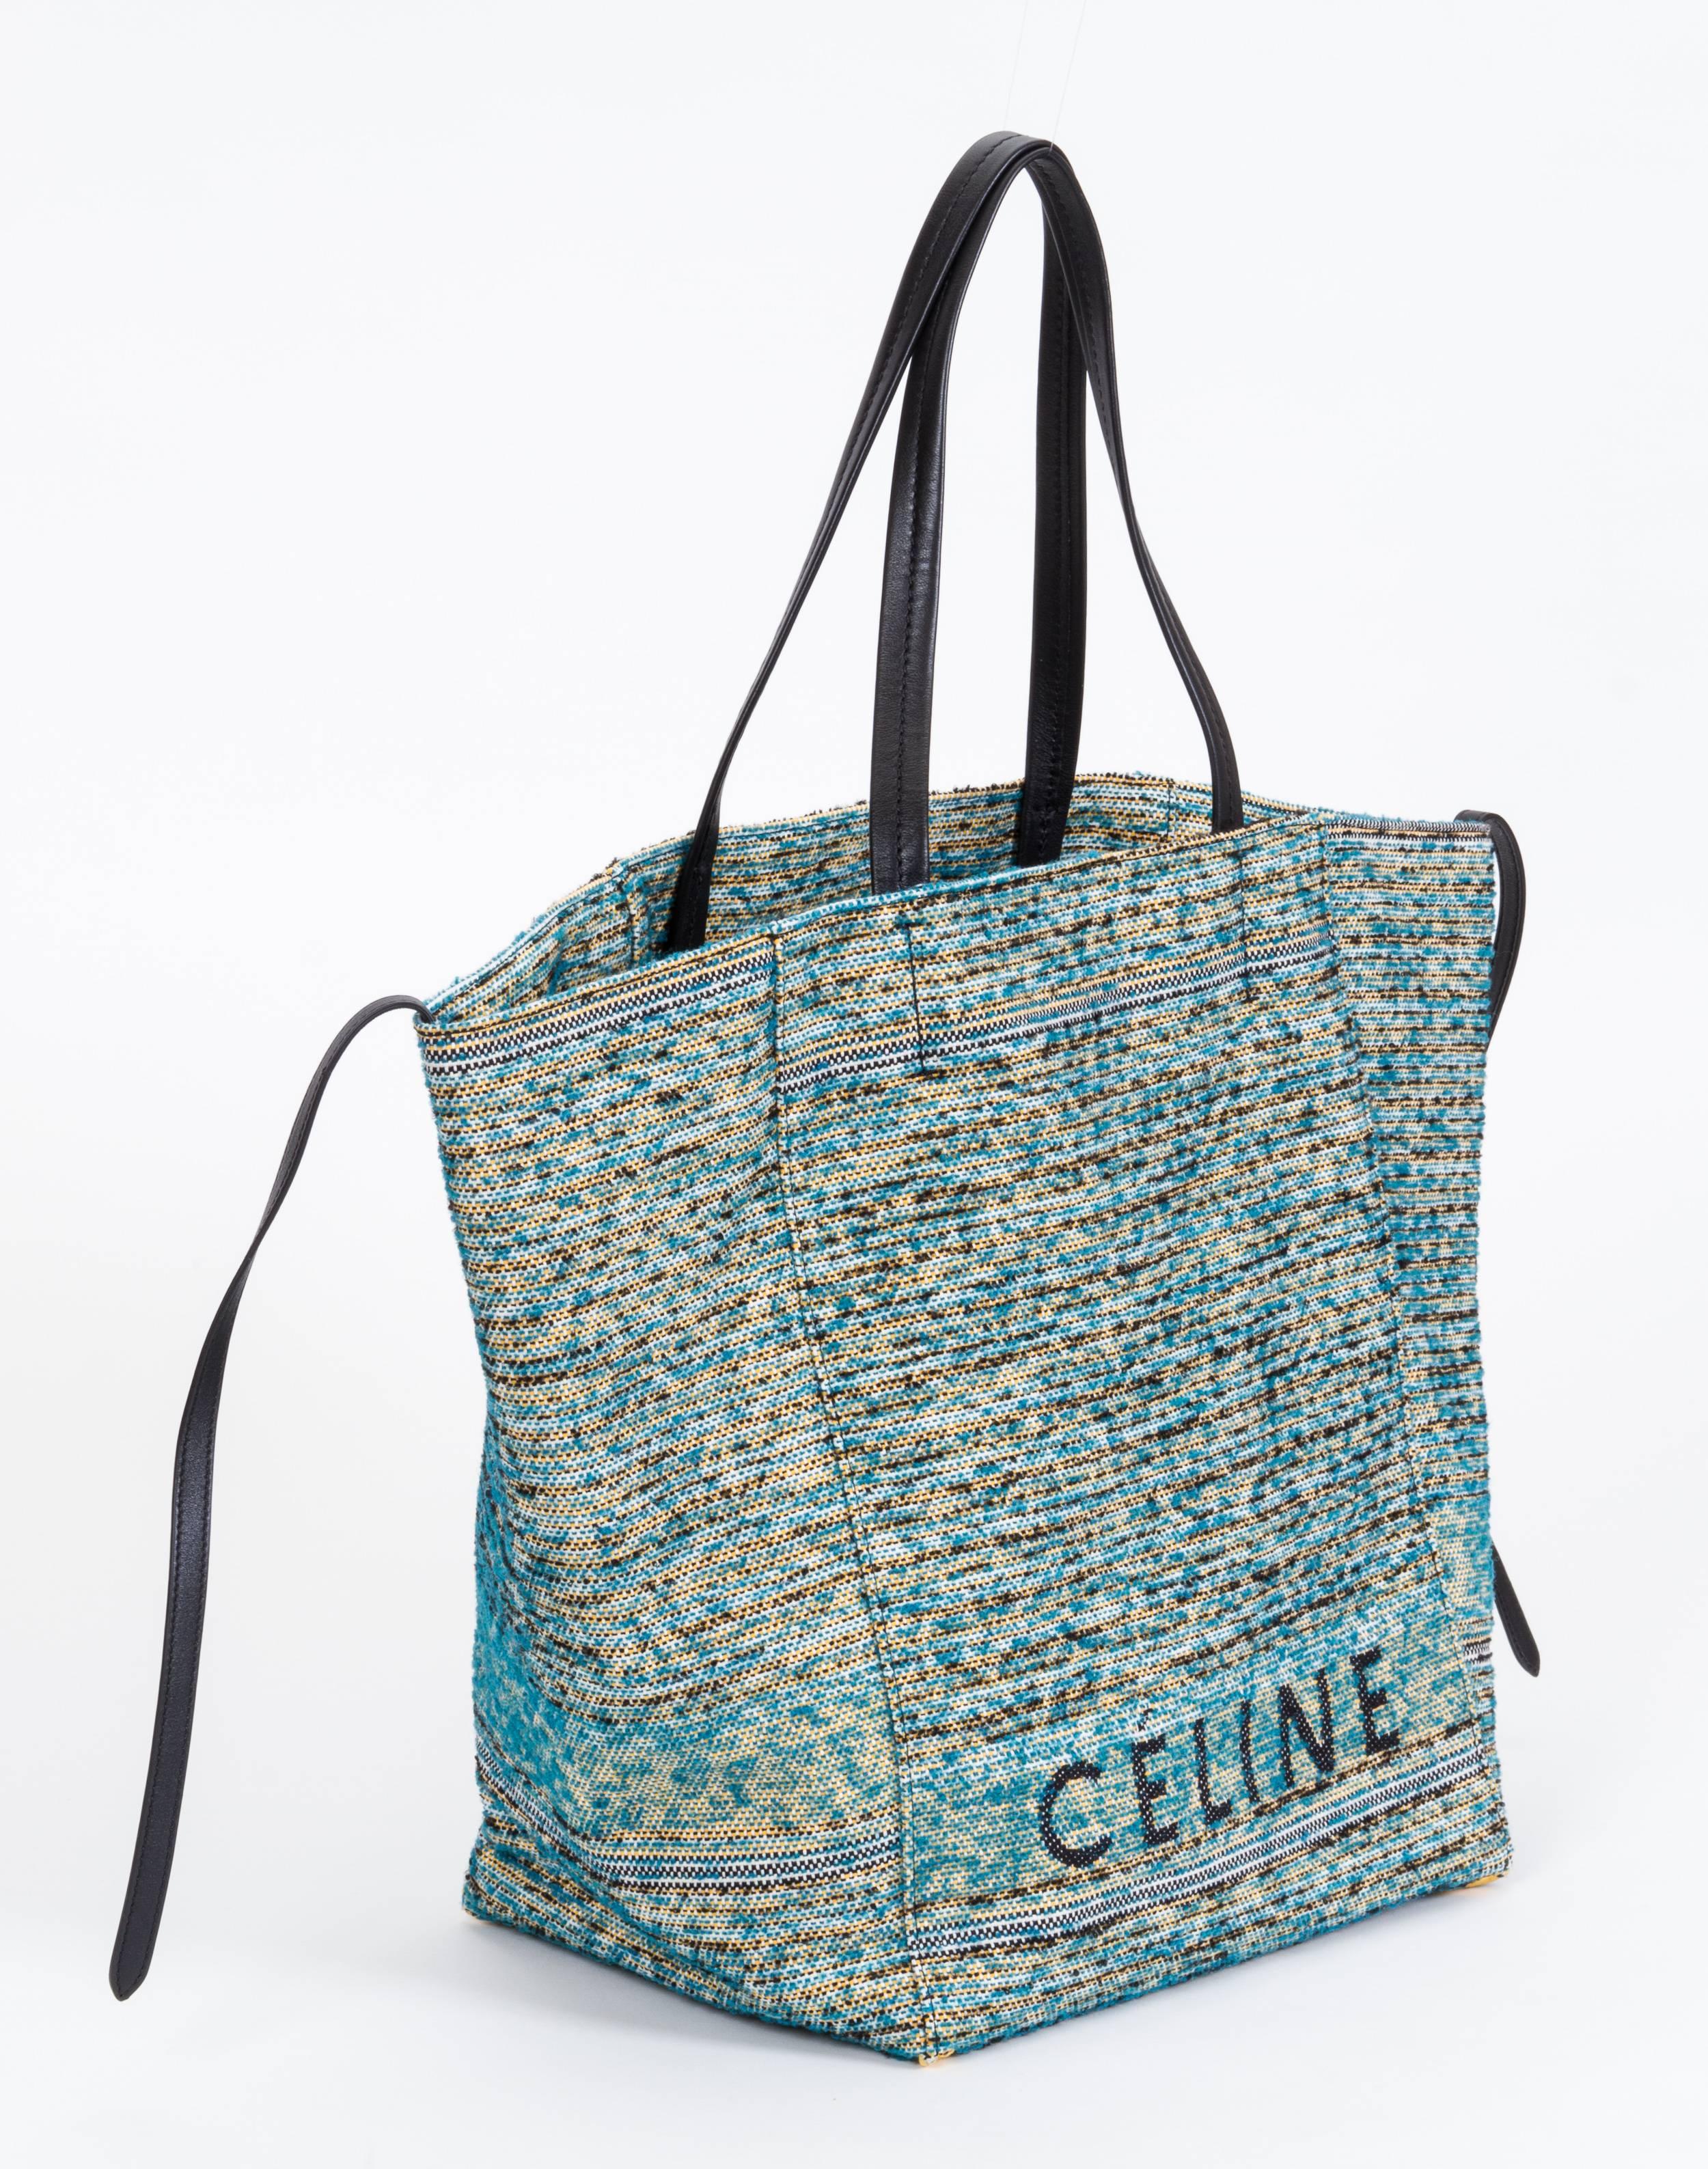 Celine brand new boucle' fabric phantom bag with black calf profiles. Handle drop 8.5